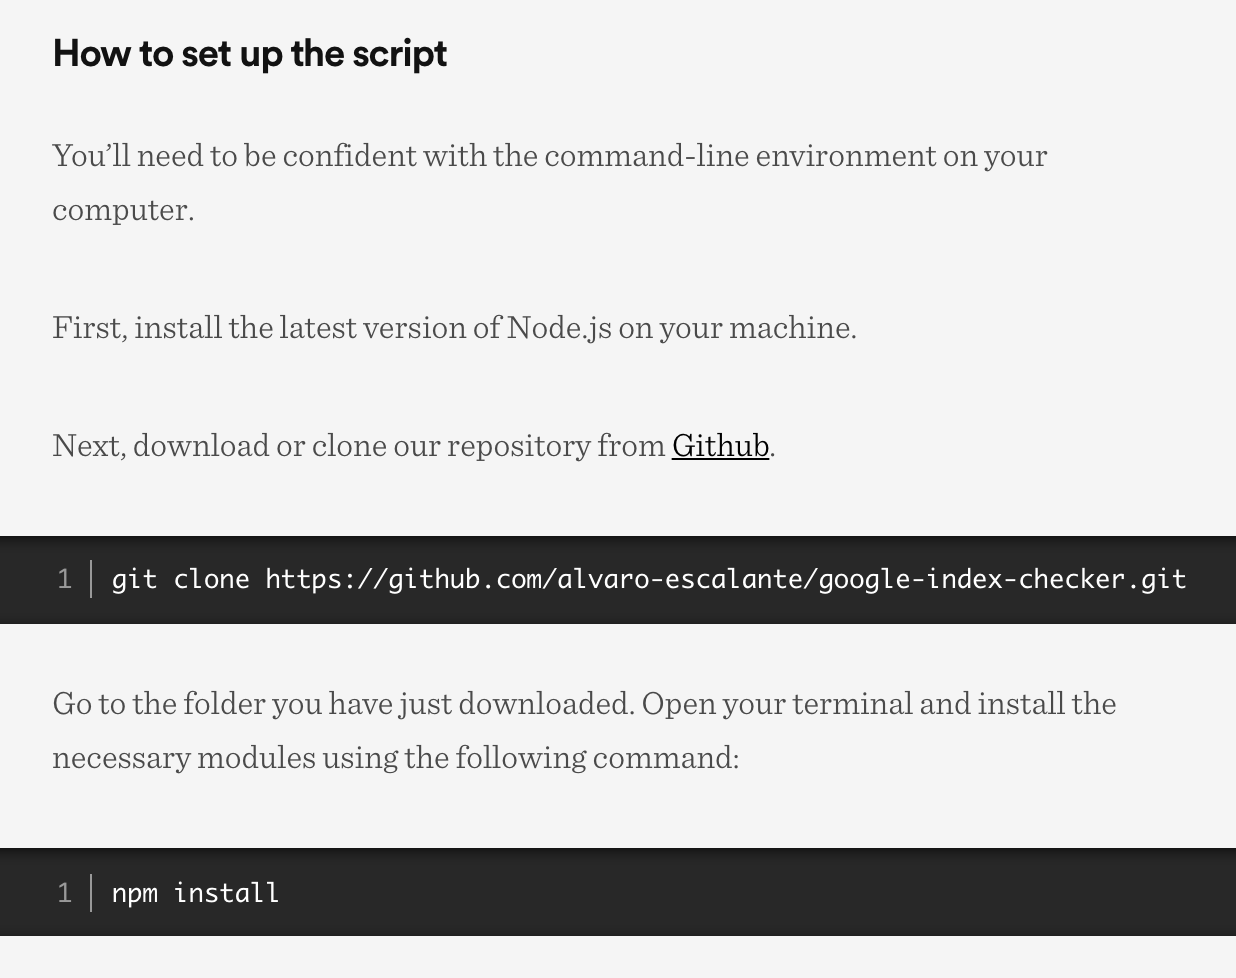 Script download instructions